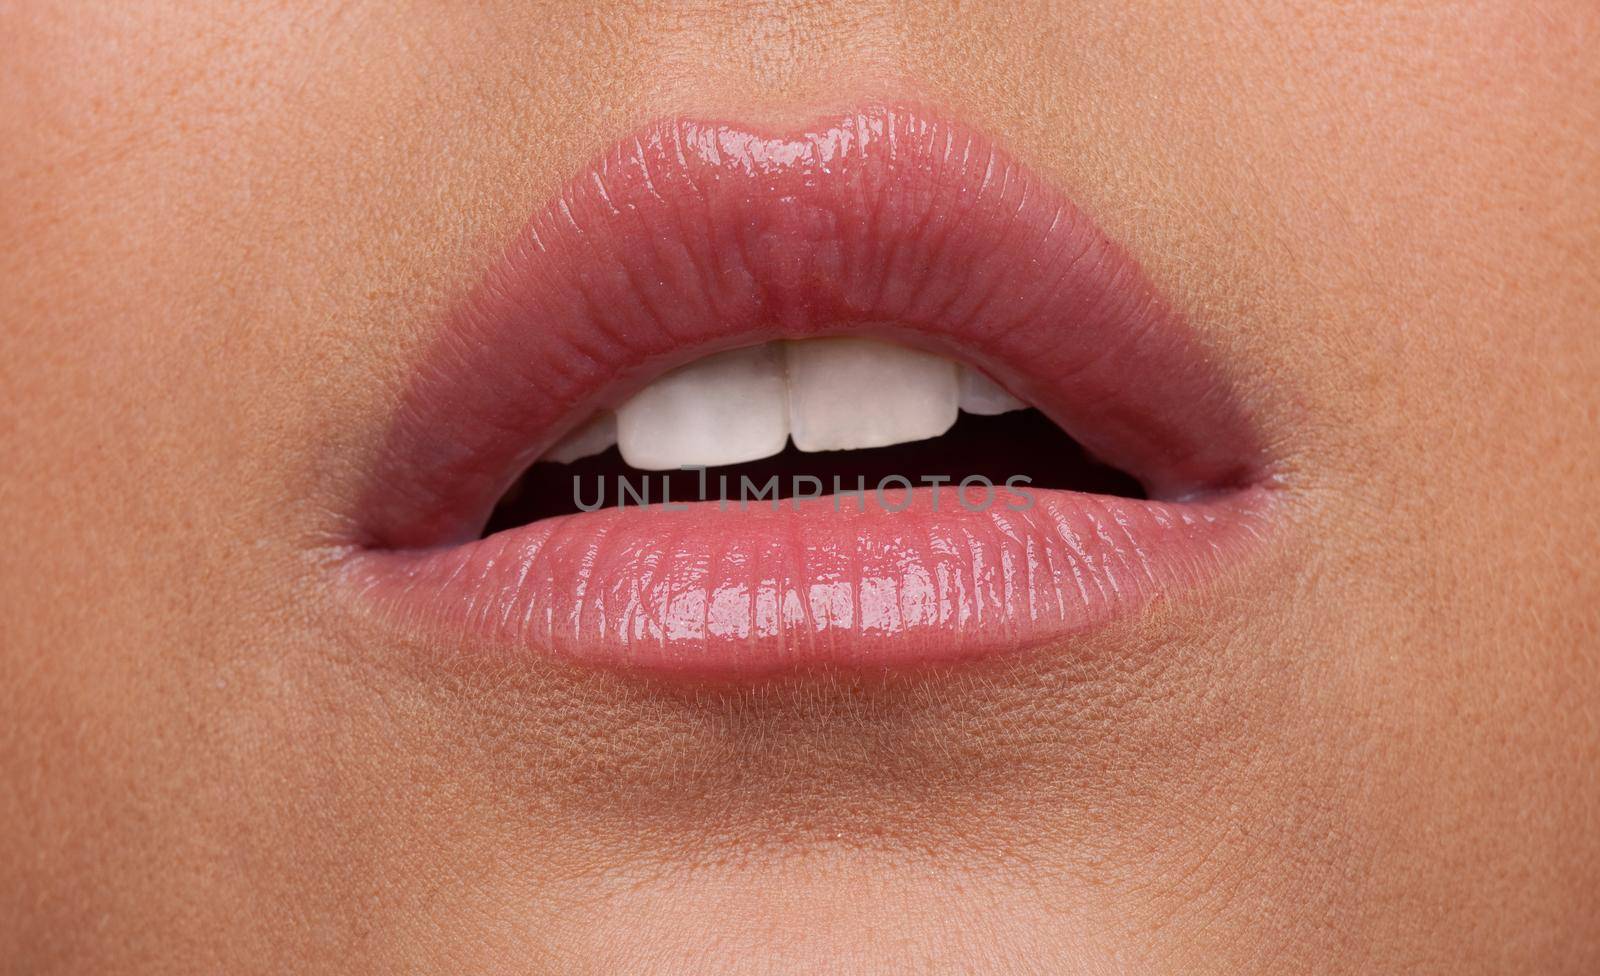 Beauty sexy woman lips open desire close-up shot